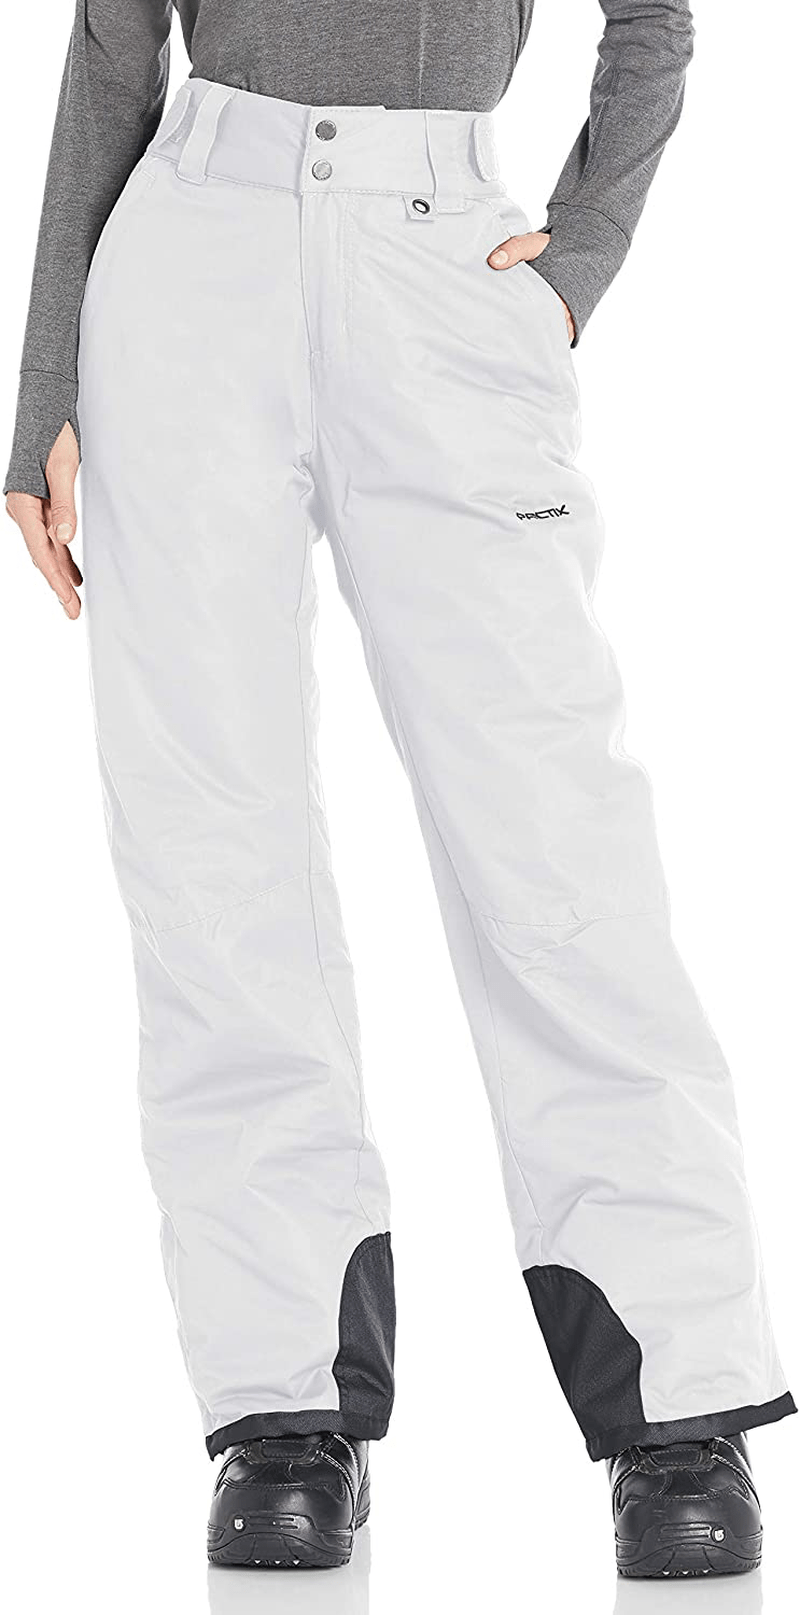 Arctix Women's Insulated Snow Pants Apparel & Accessories > Clothing > Outerwear > Snow Pants & Suits Arctix White 3X 